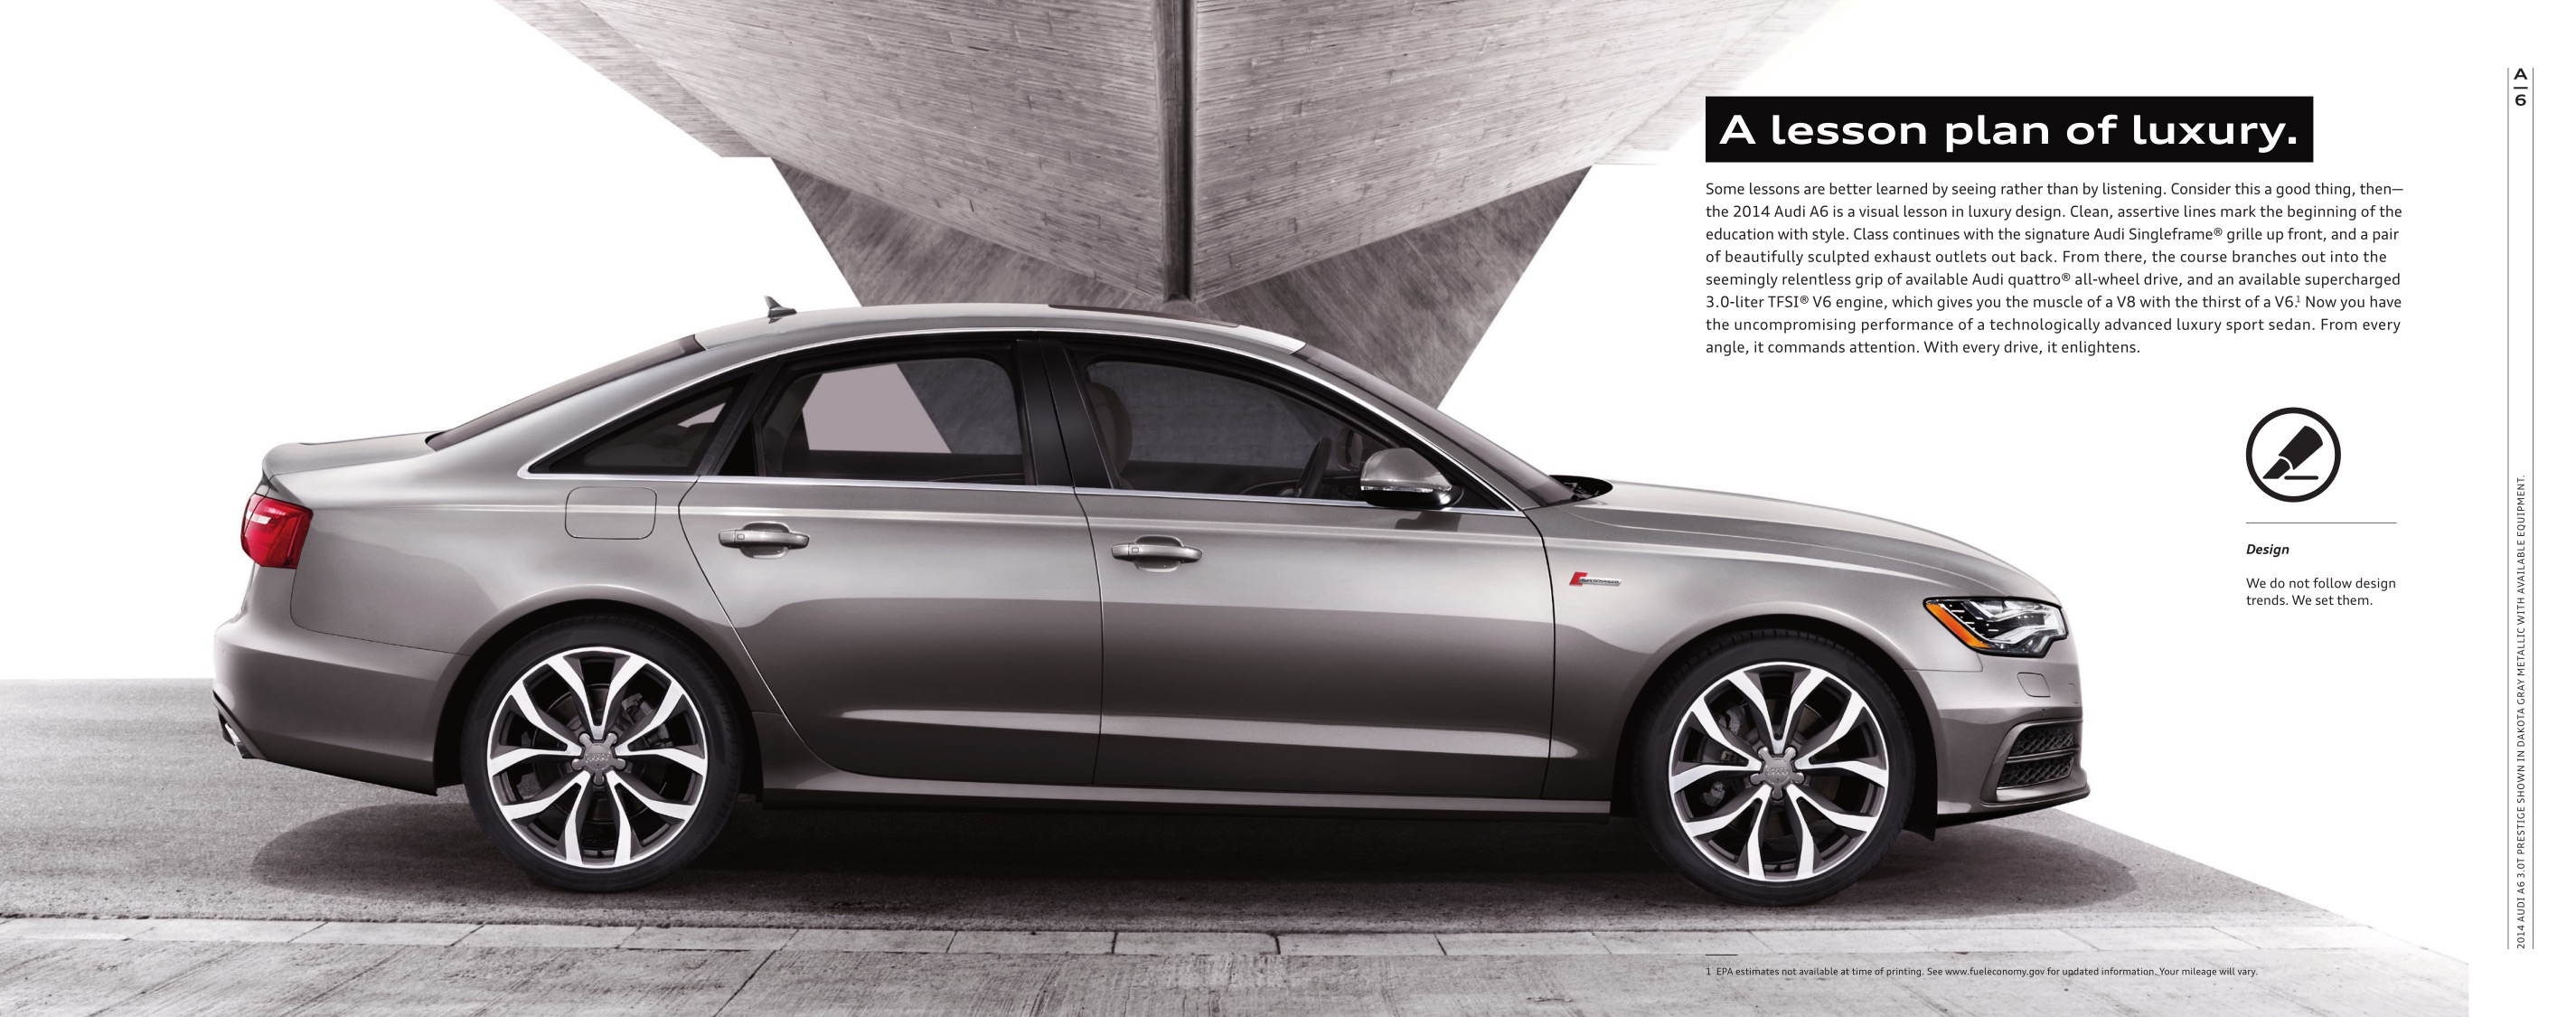 2014 Audi A6 Brochure Page 1